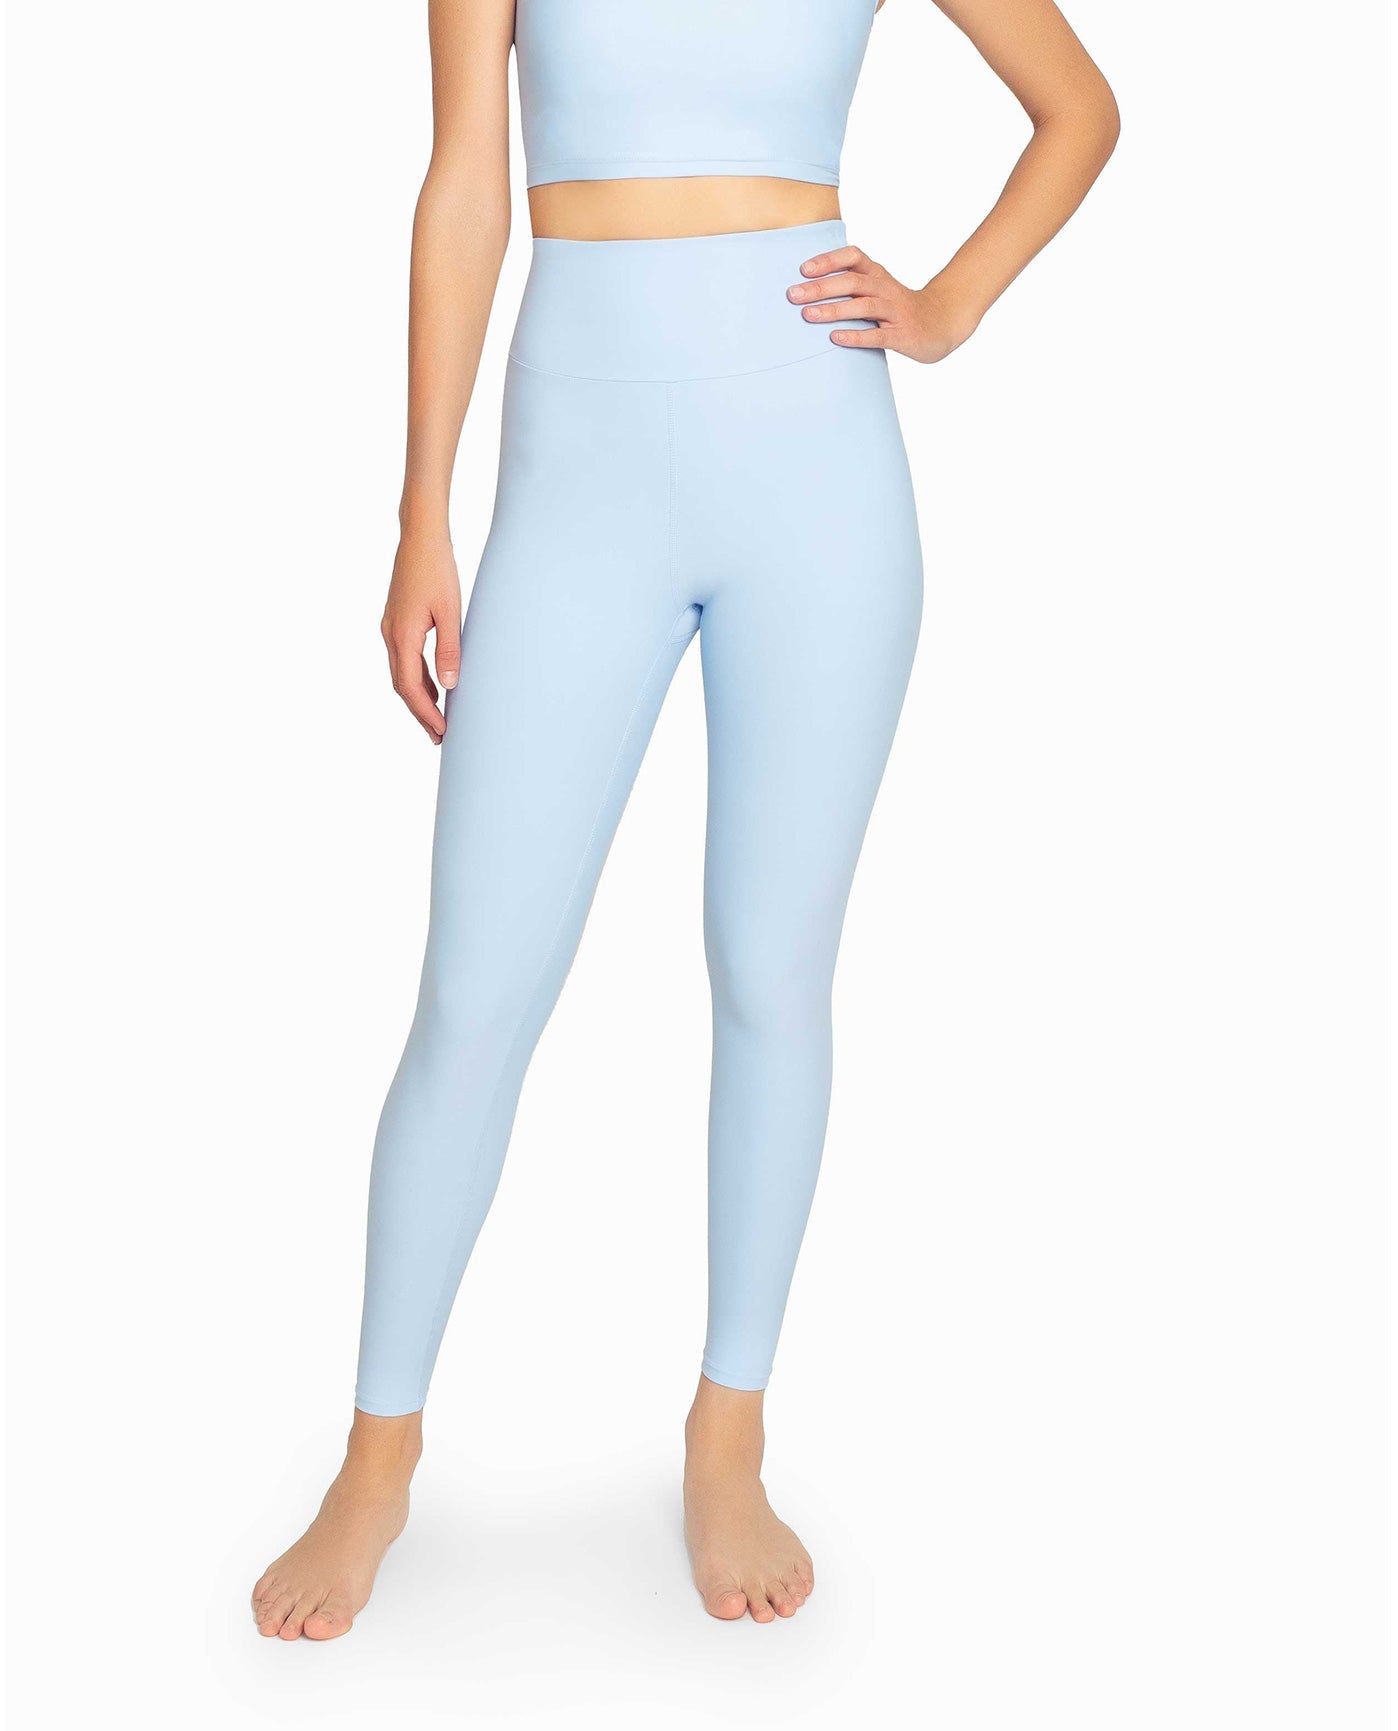 Nicole Miller sport girls athletic leggings size - Depop